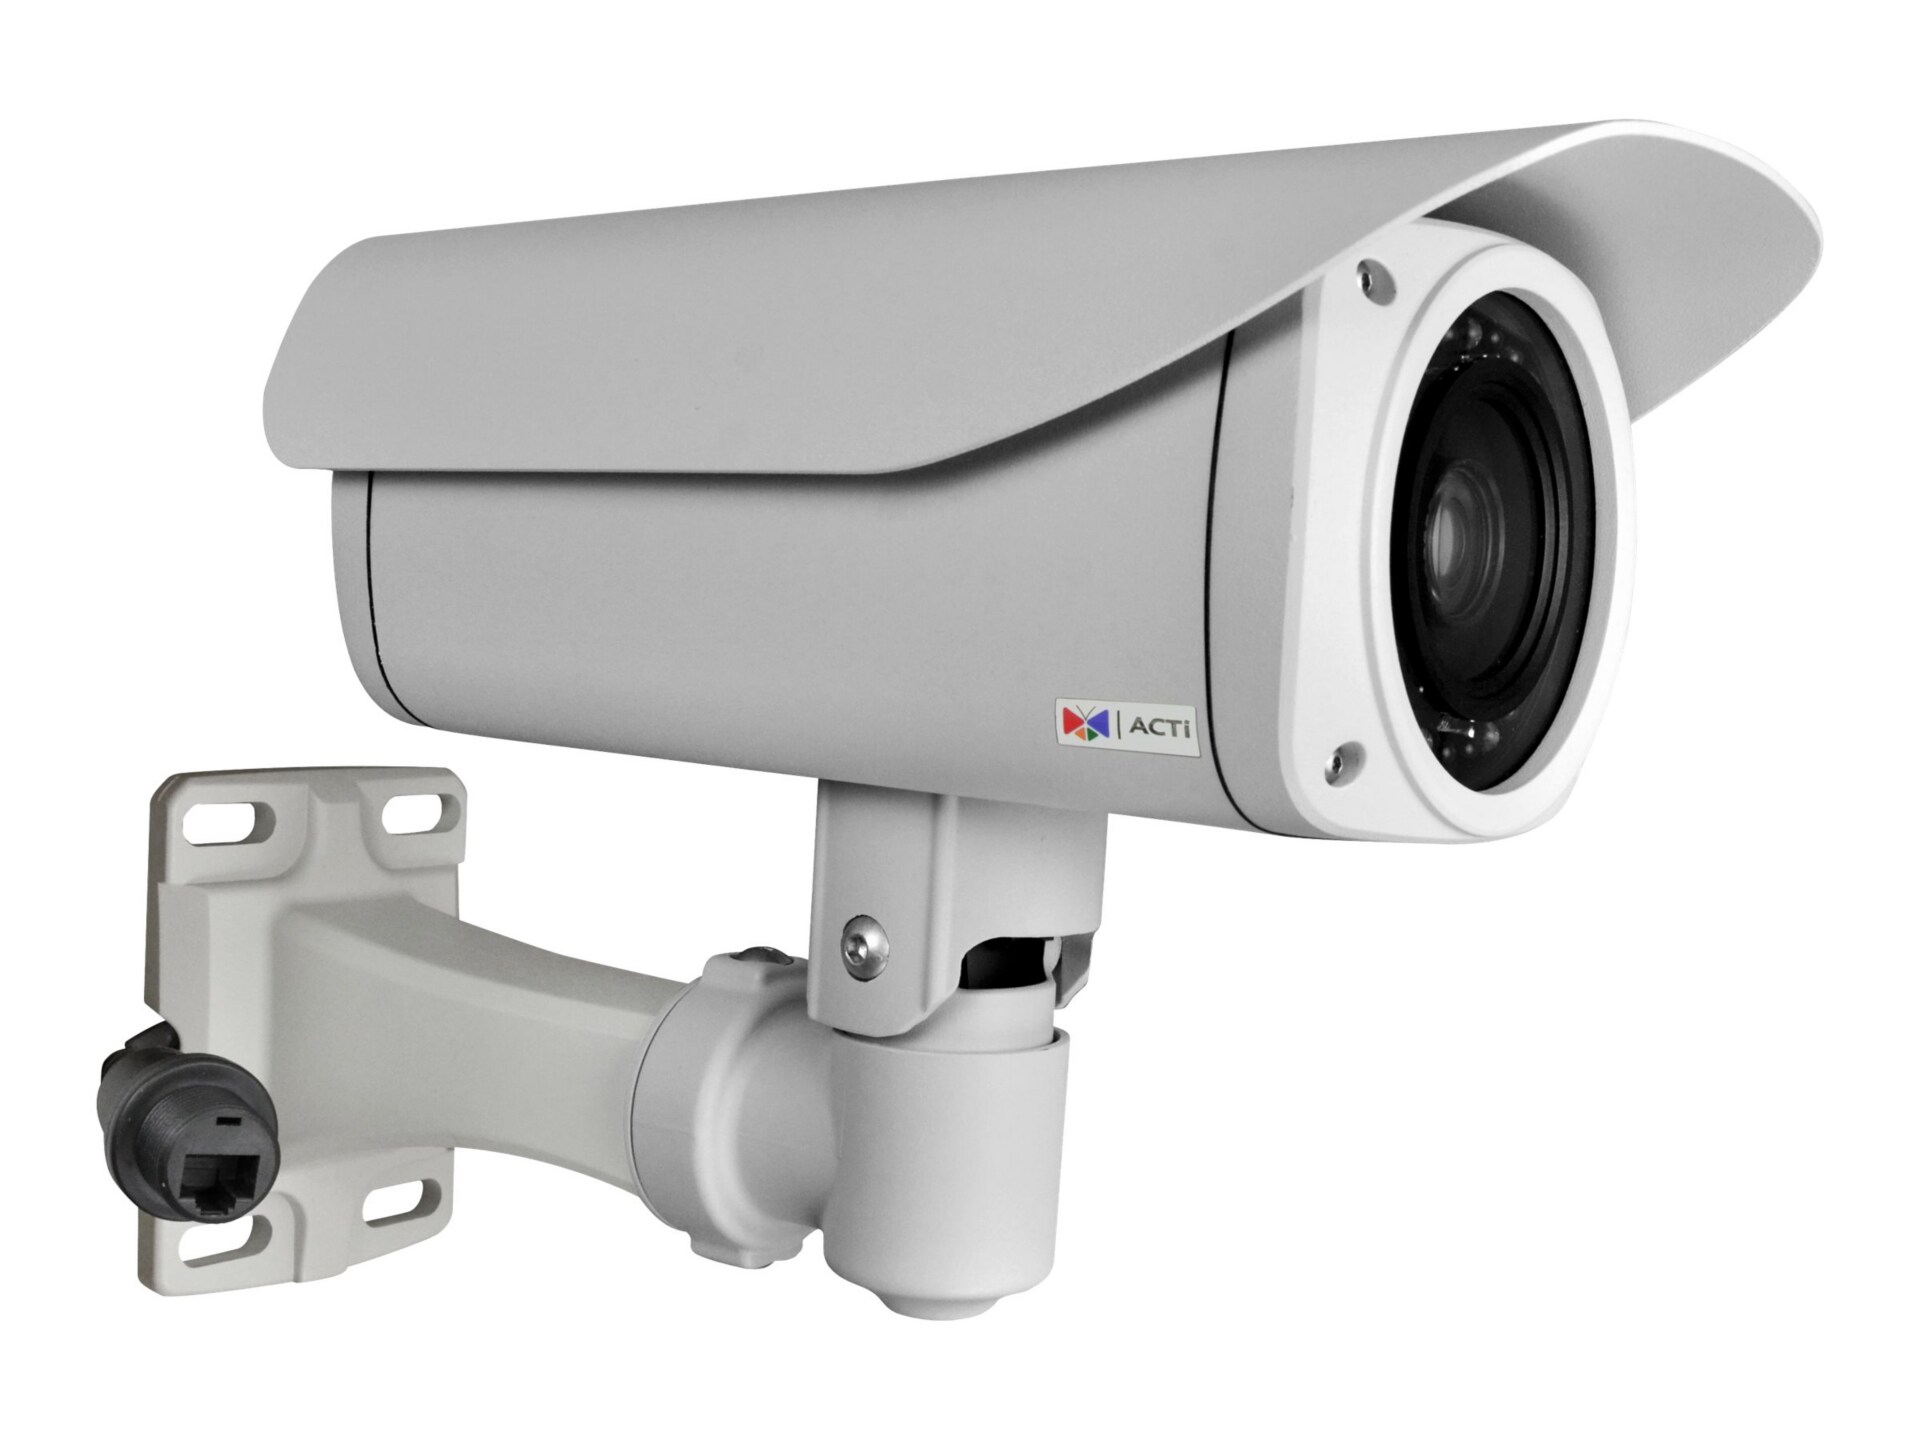 ACTi I45 - network surveillance camera